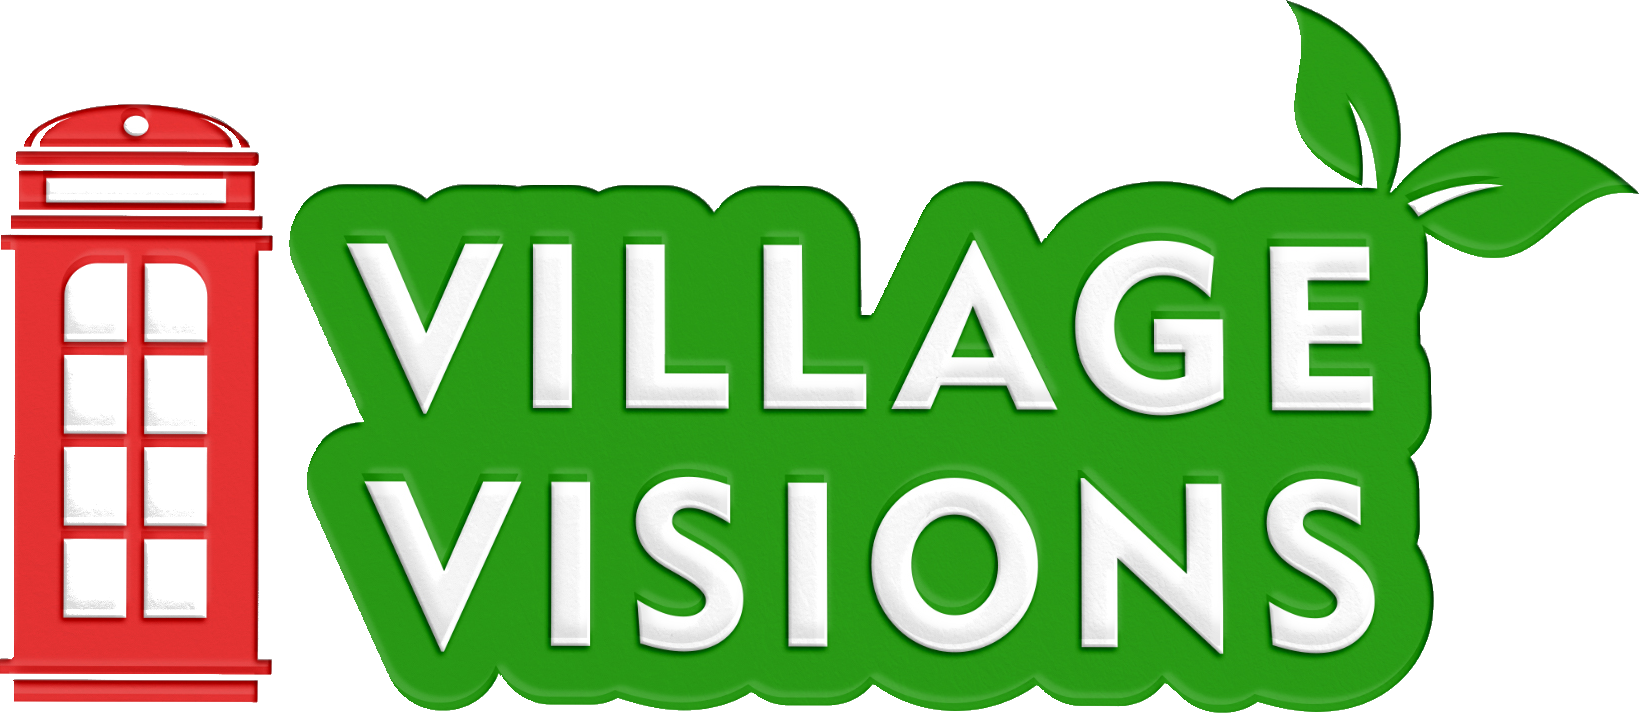 Village Visions